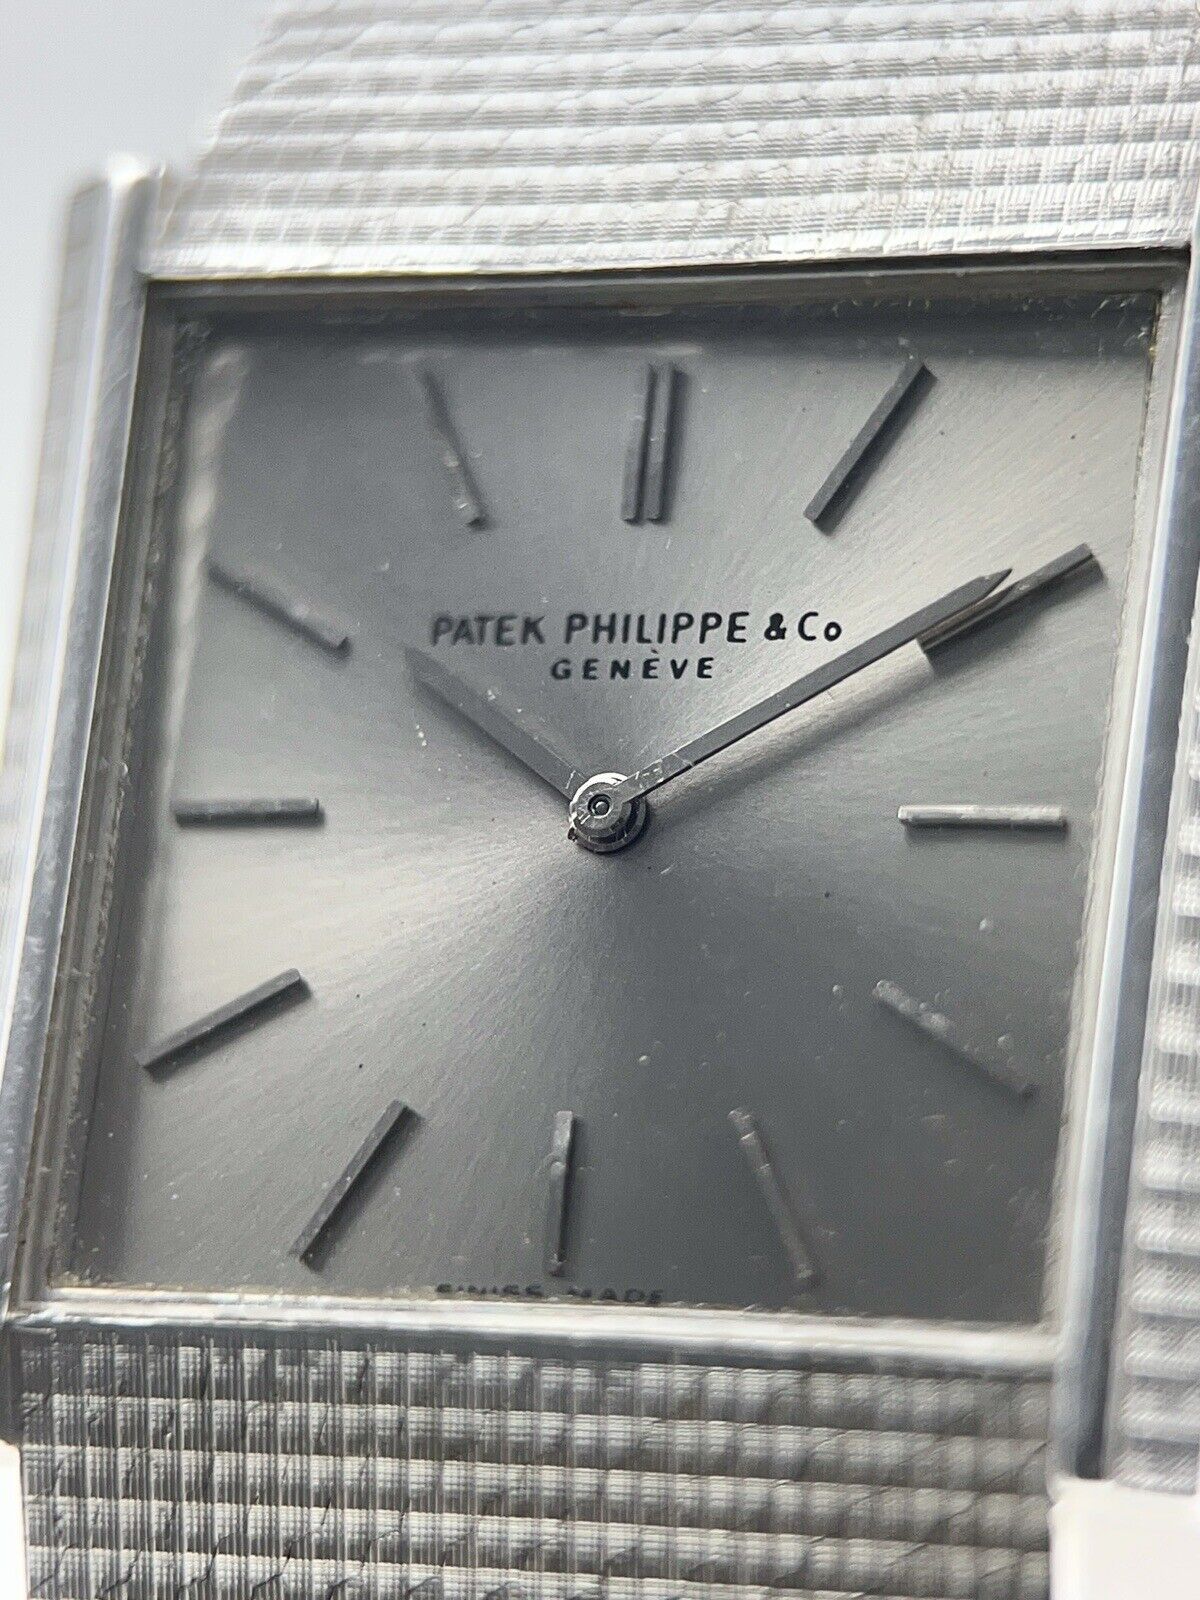 Patek Philippe 18k White Gold 26mm Manual Wind Watch 3570/1